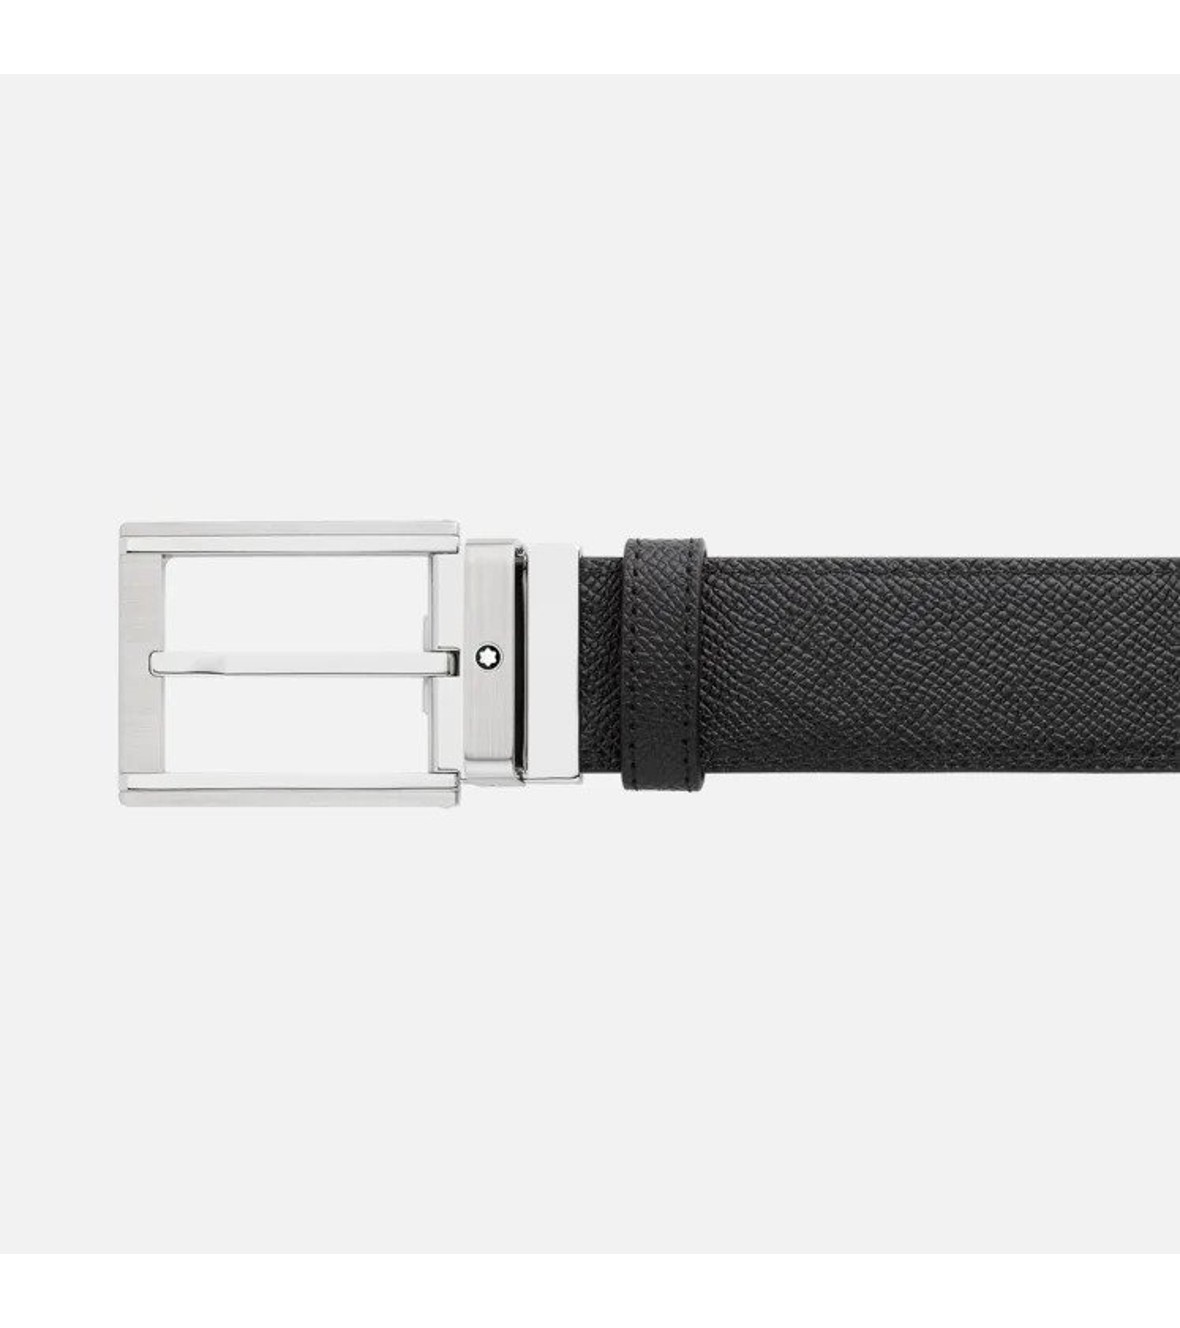 Black/Brown 35 mm Reversible Leather Belt